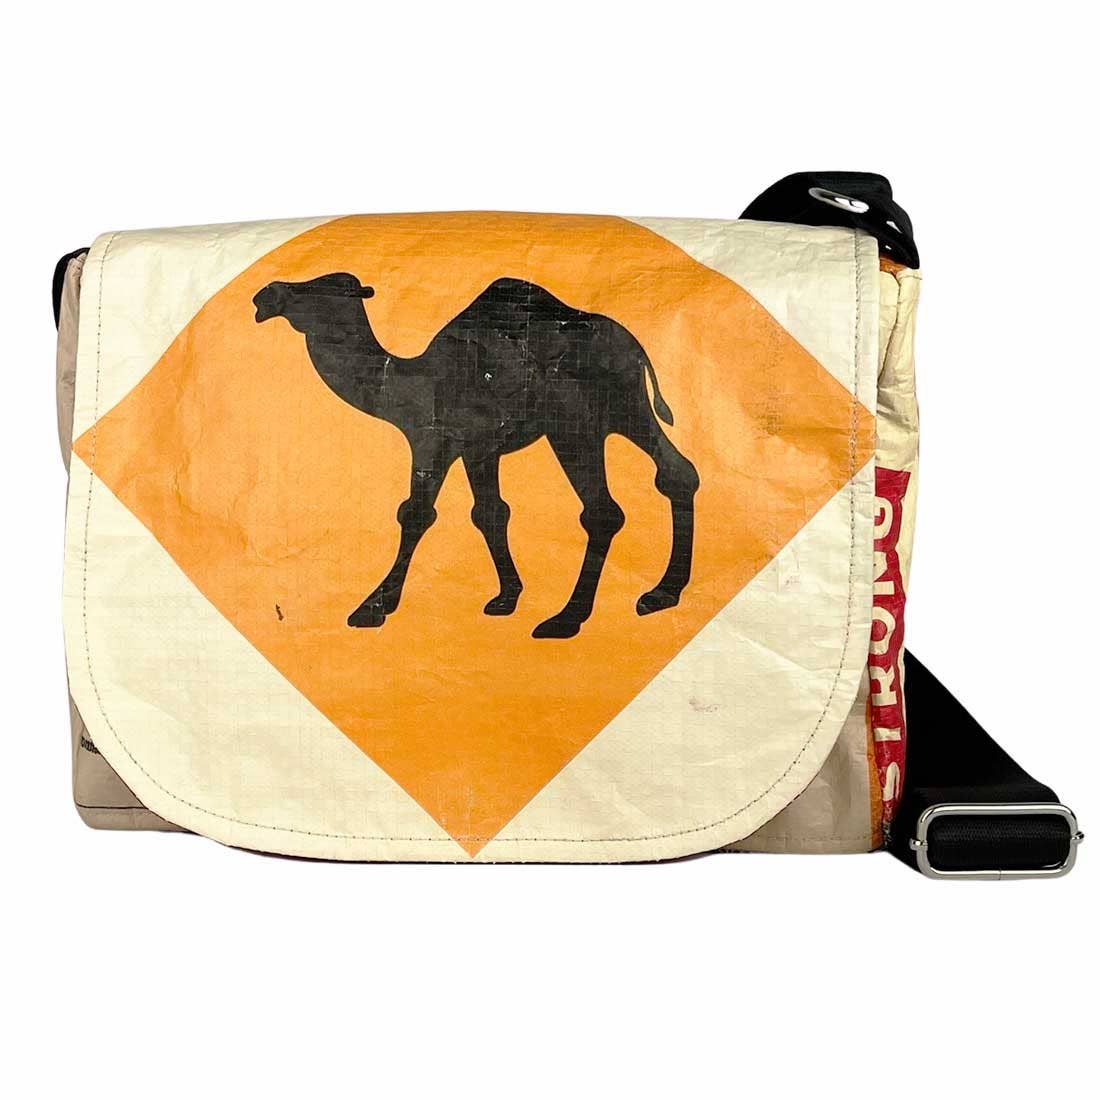 Malia Designs - Small Messenger Bag